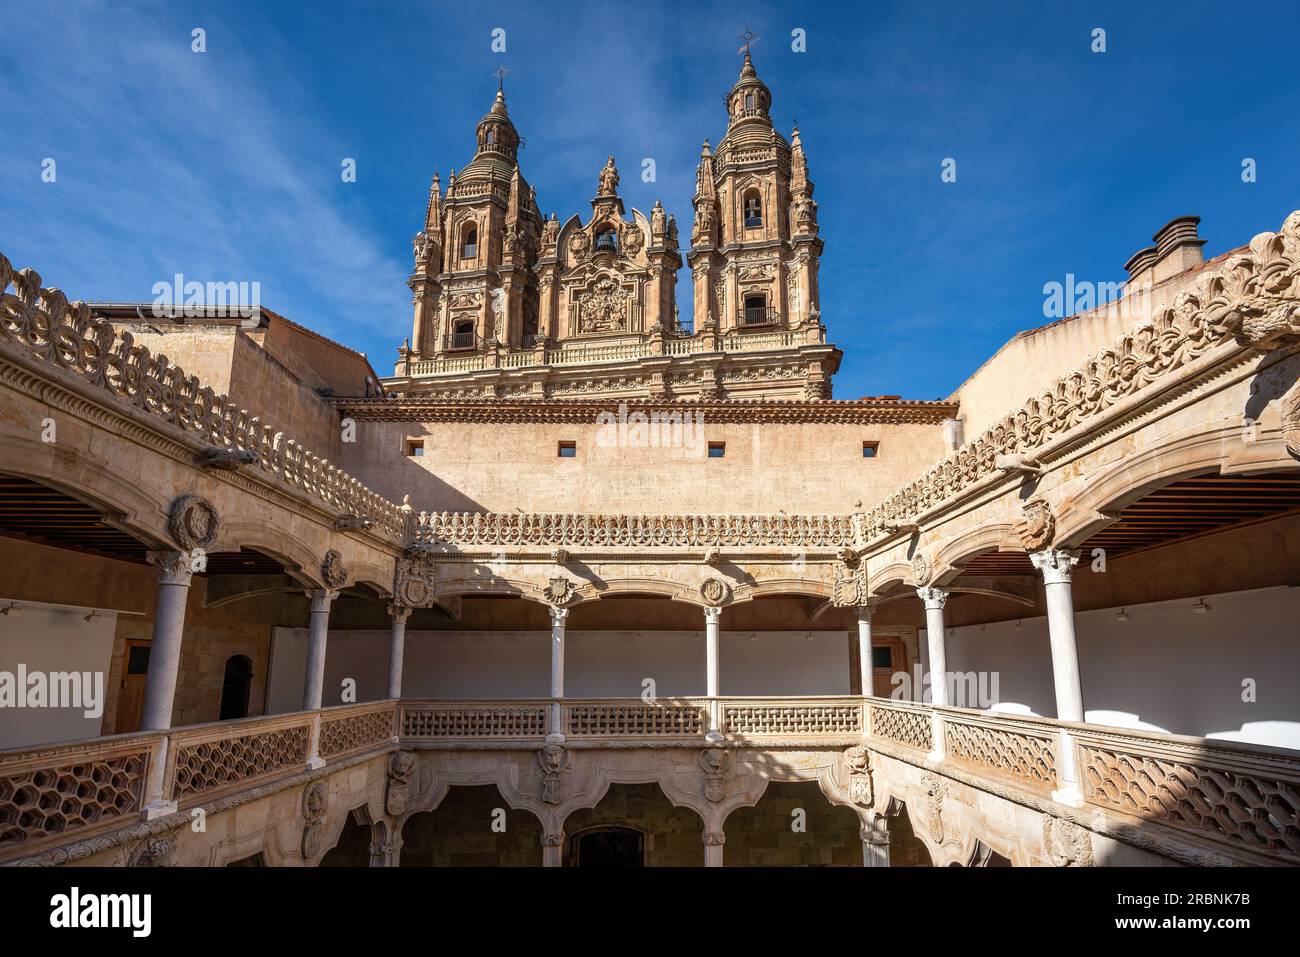 Casa de las Conchas (House of Shells) Courtyard and La Clerecia Church - Salamanca, Spain Stock Photo